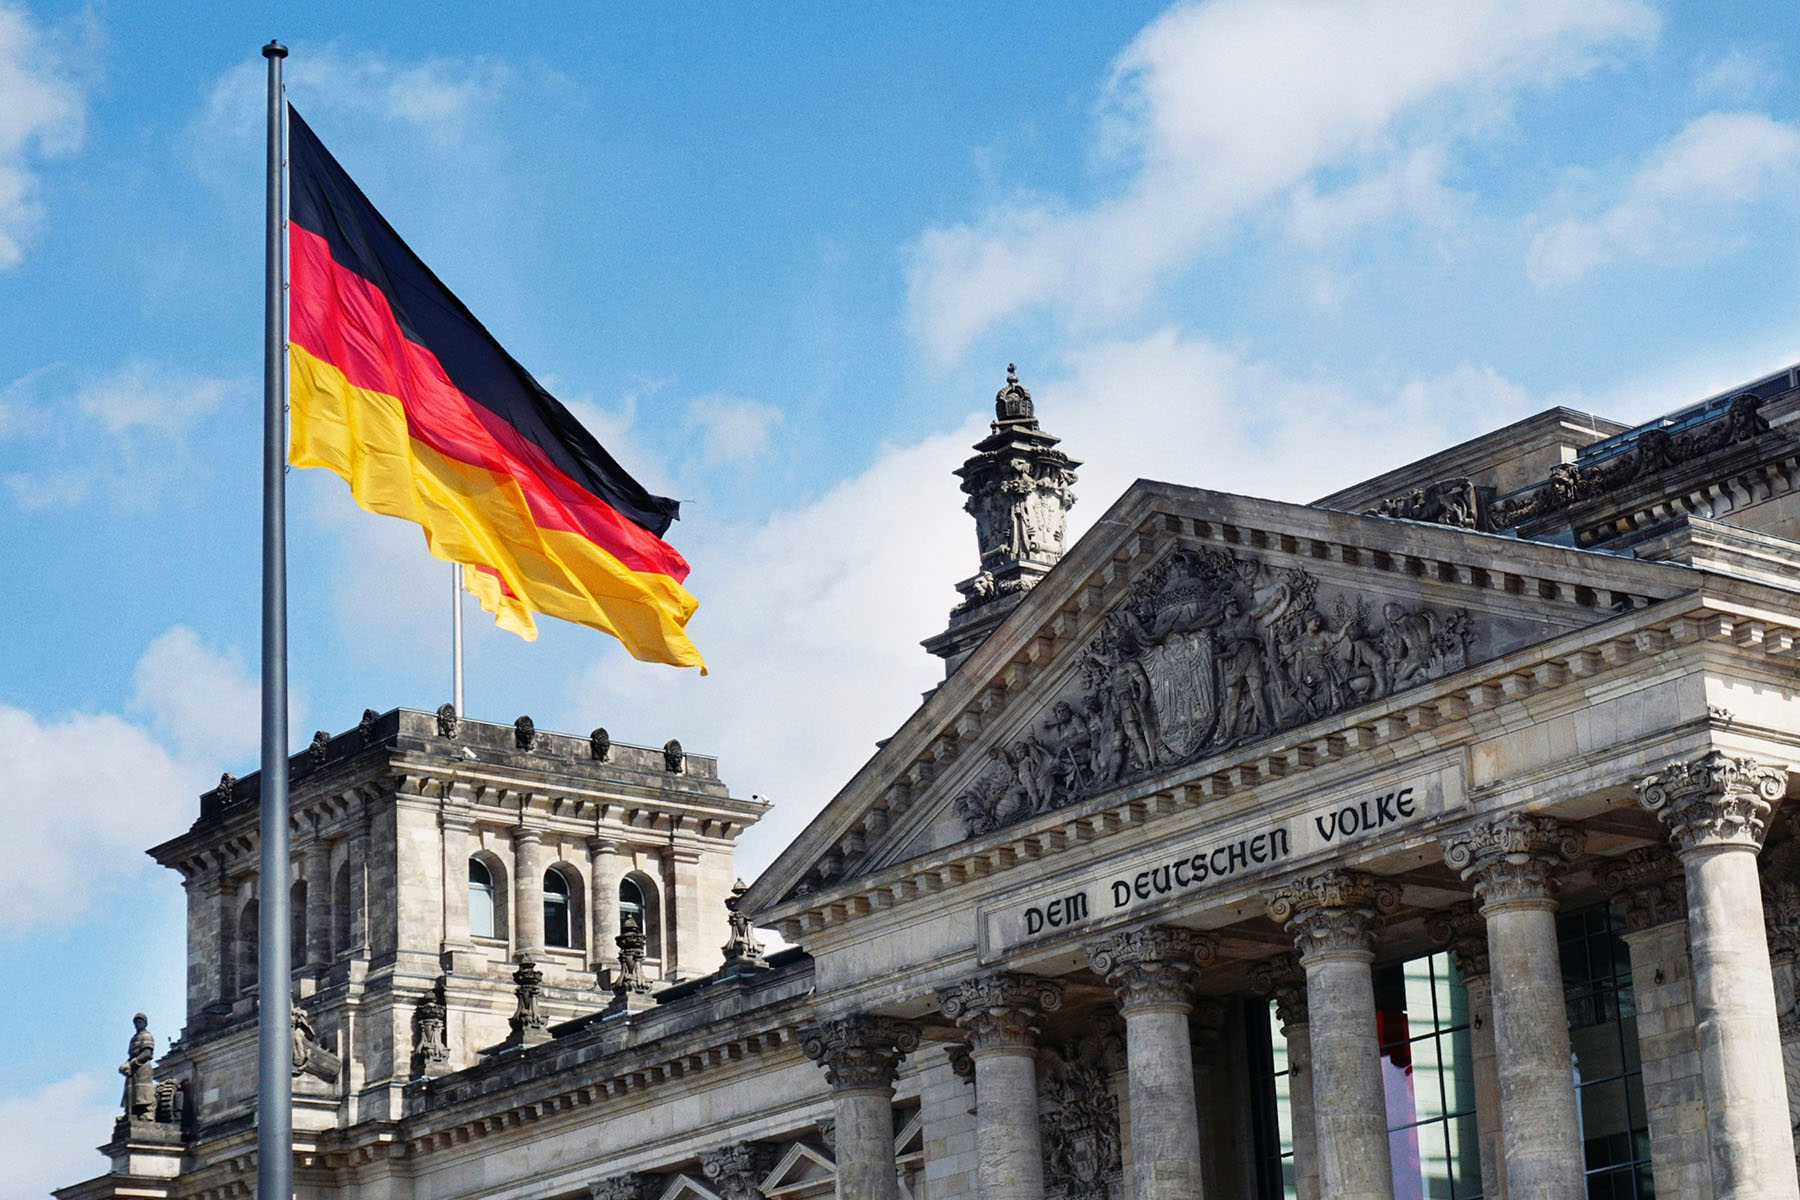 Large German flag is flying over the Platz der Republik in Berlin, Germany. The building reads "Dem Deutschen Volke".